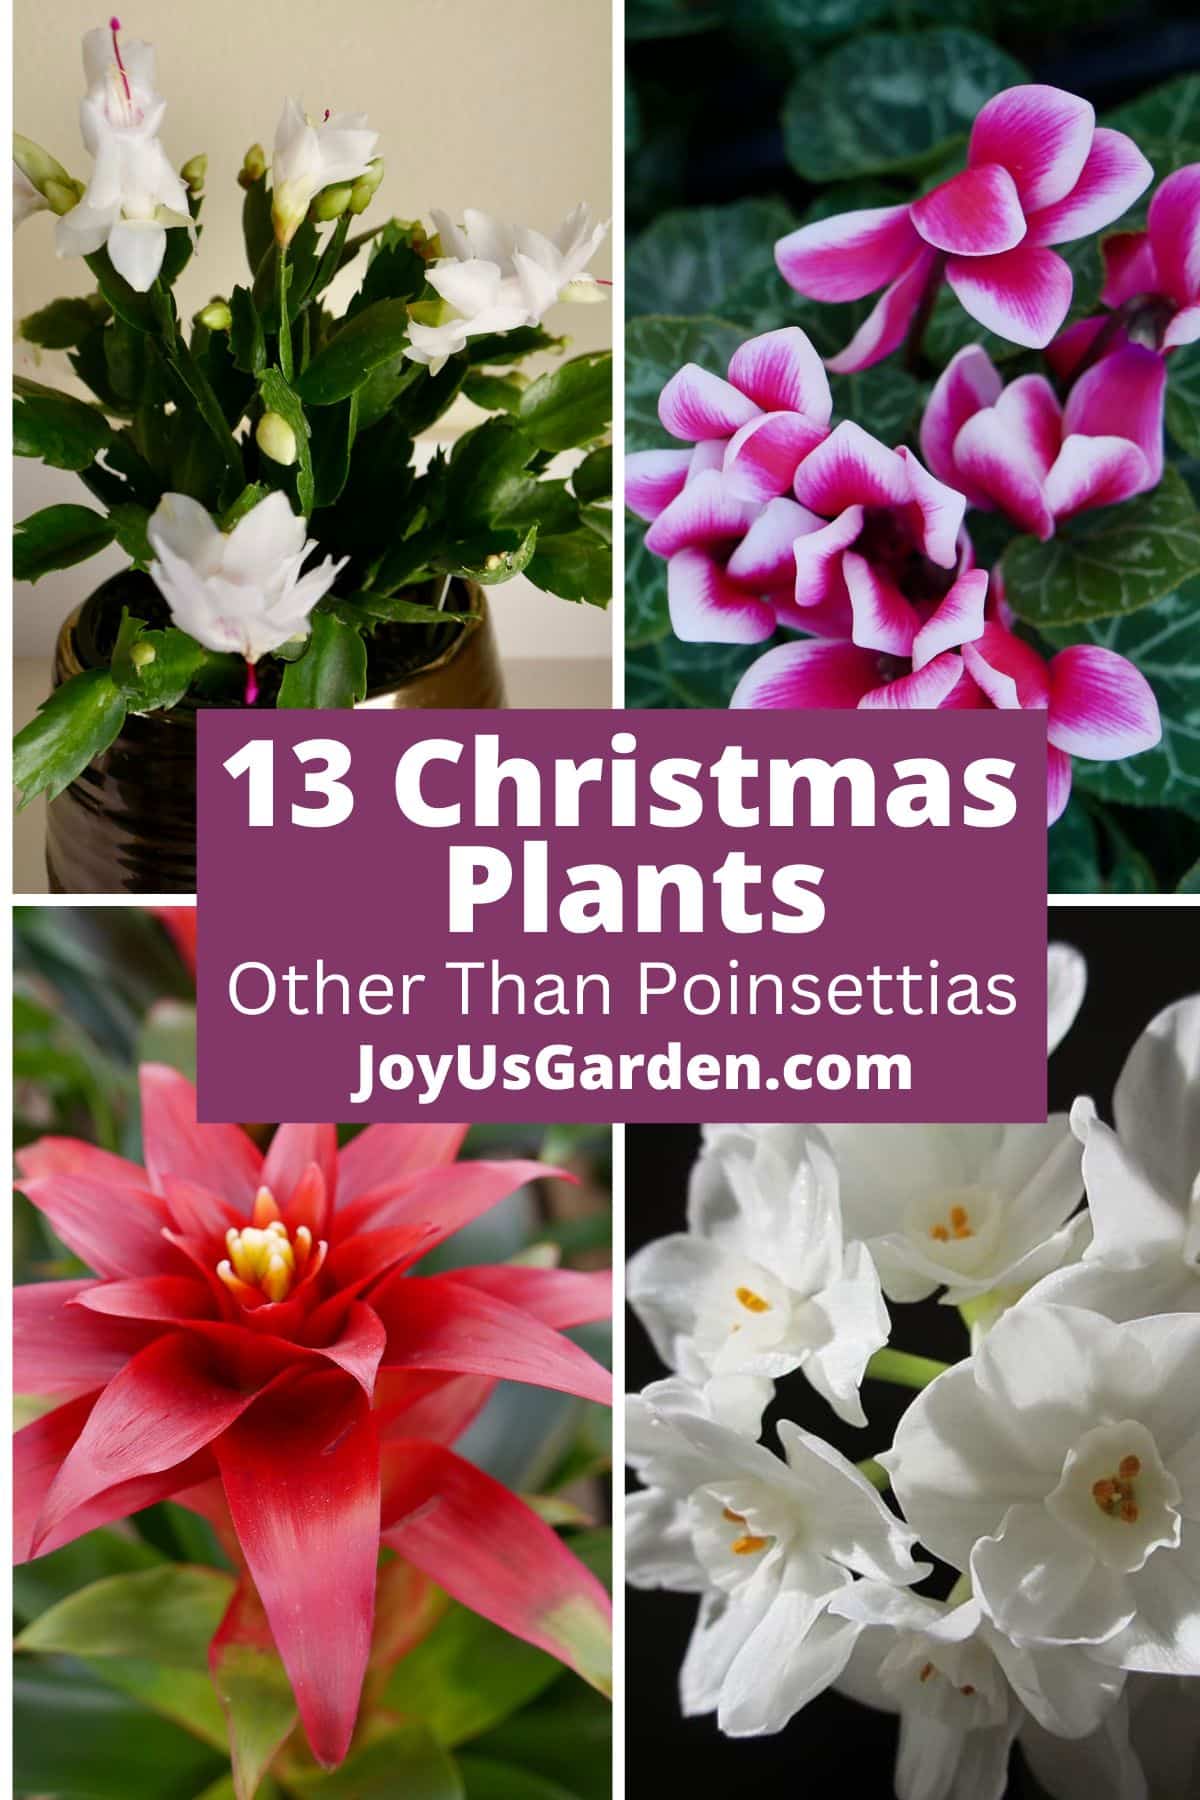  पॉइन्सेटियास के अलावा 13 क्रिसमस पौधे